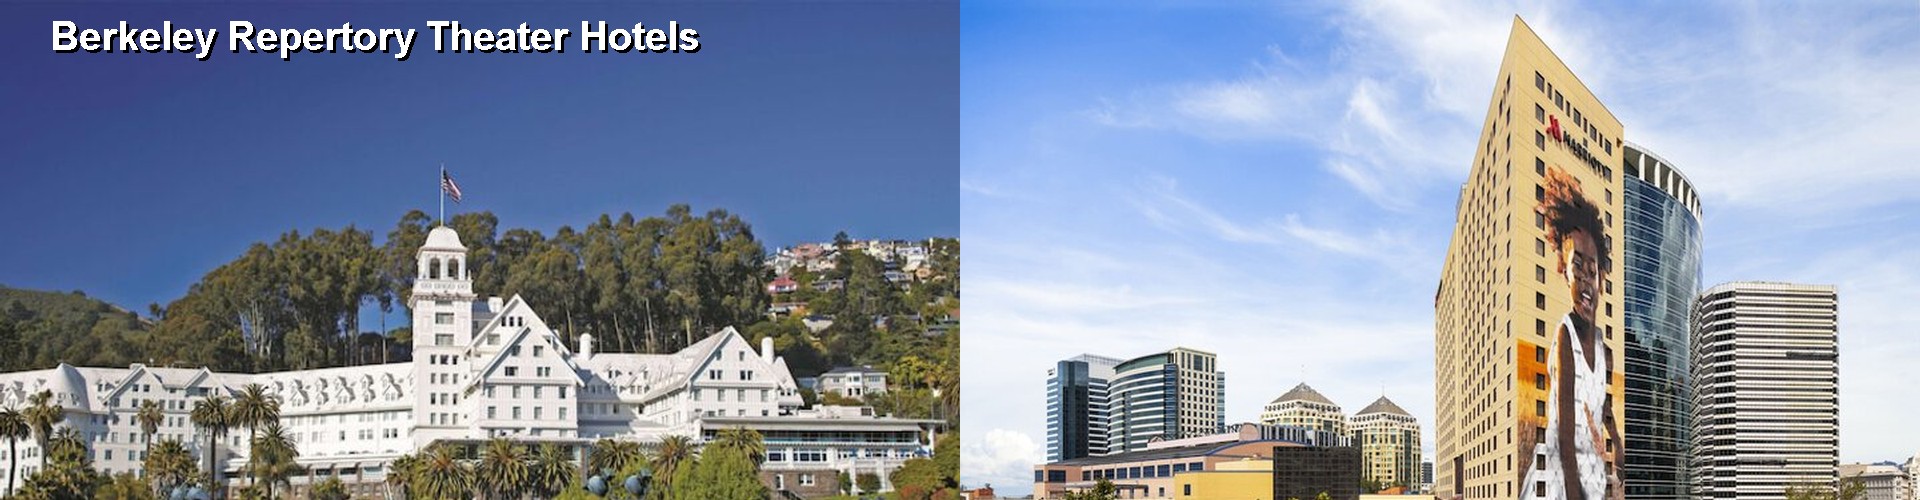 3 Best Hotels near Berkeley Repertory Theater